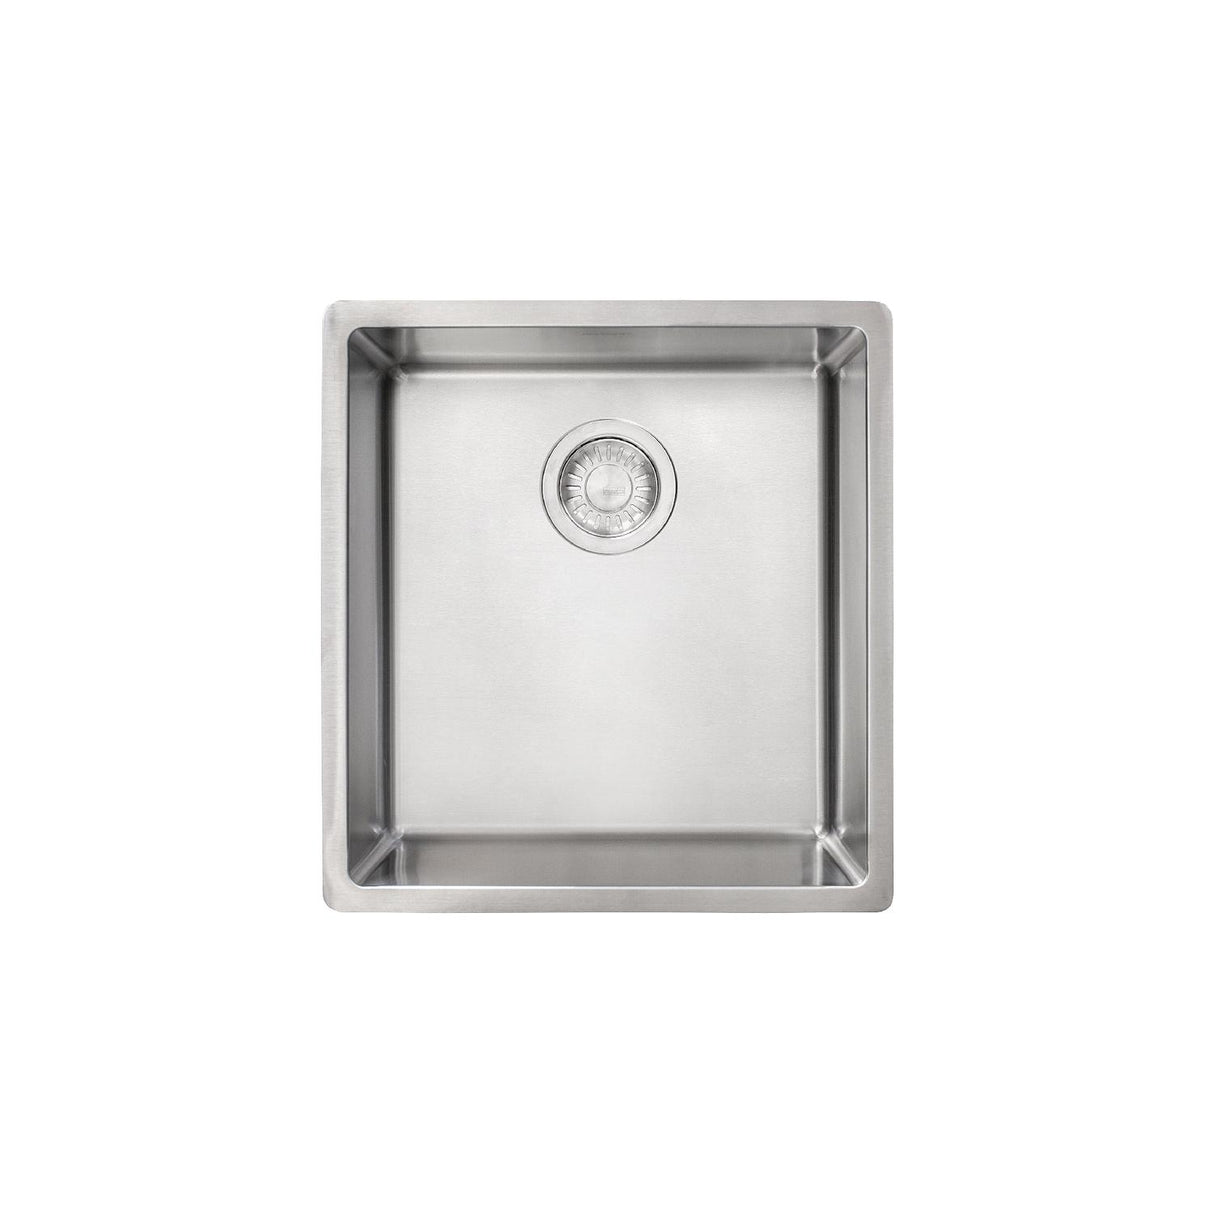 FRANKE CUX11015 Cube 16.5-in. x 18-in. 18 Gauge Stainless Steel Undermount Single Bowl Prep Sink - CUX11015 In Pearl